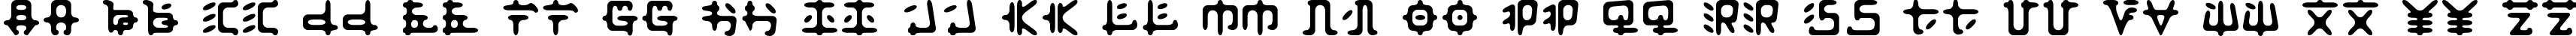 Пример написания английского алфавита шрифтом Anyong